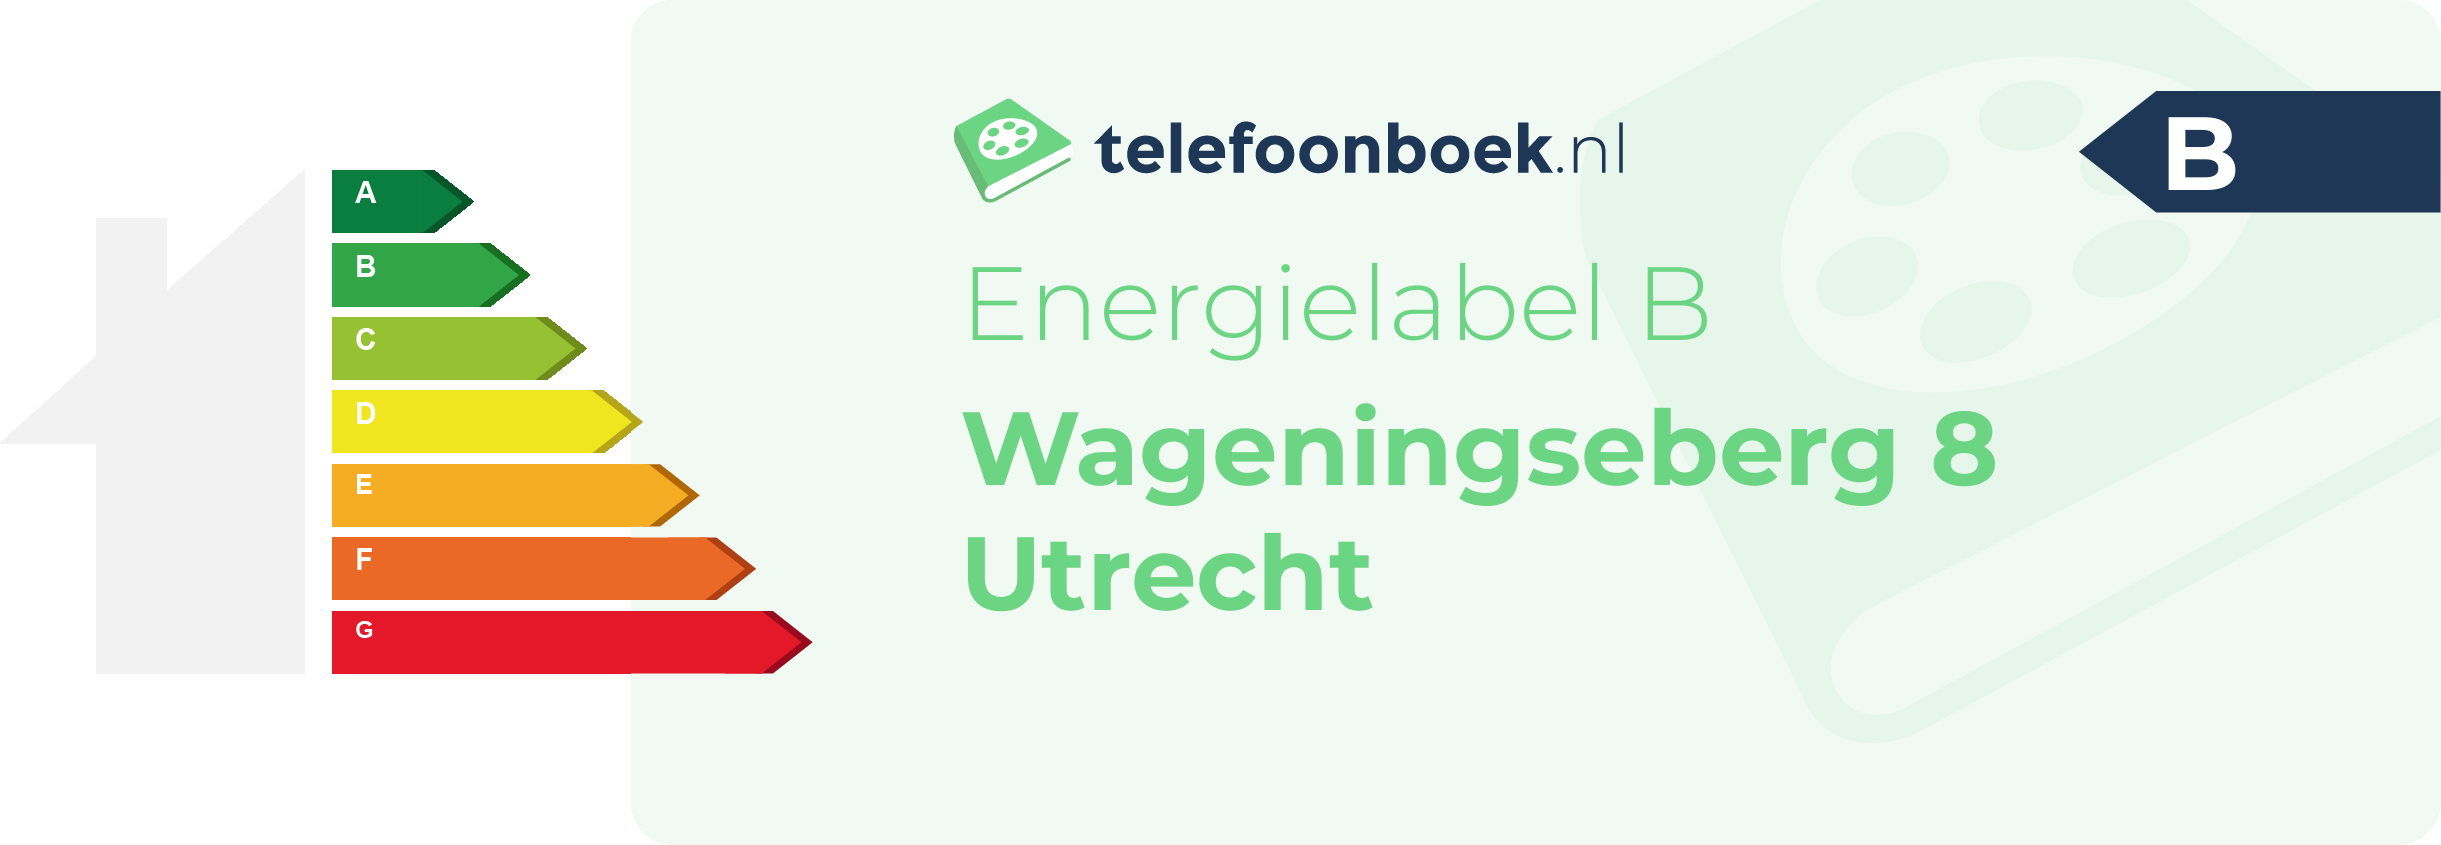 Energielabel Wageningseberg 8 Utrecht